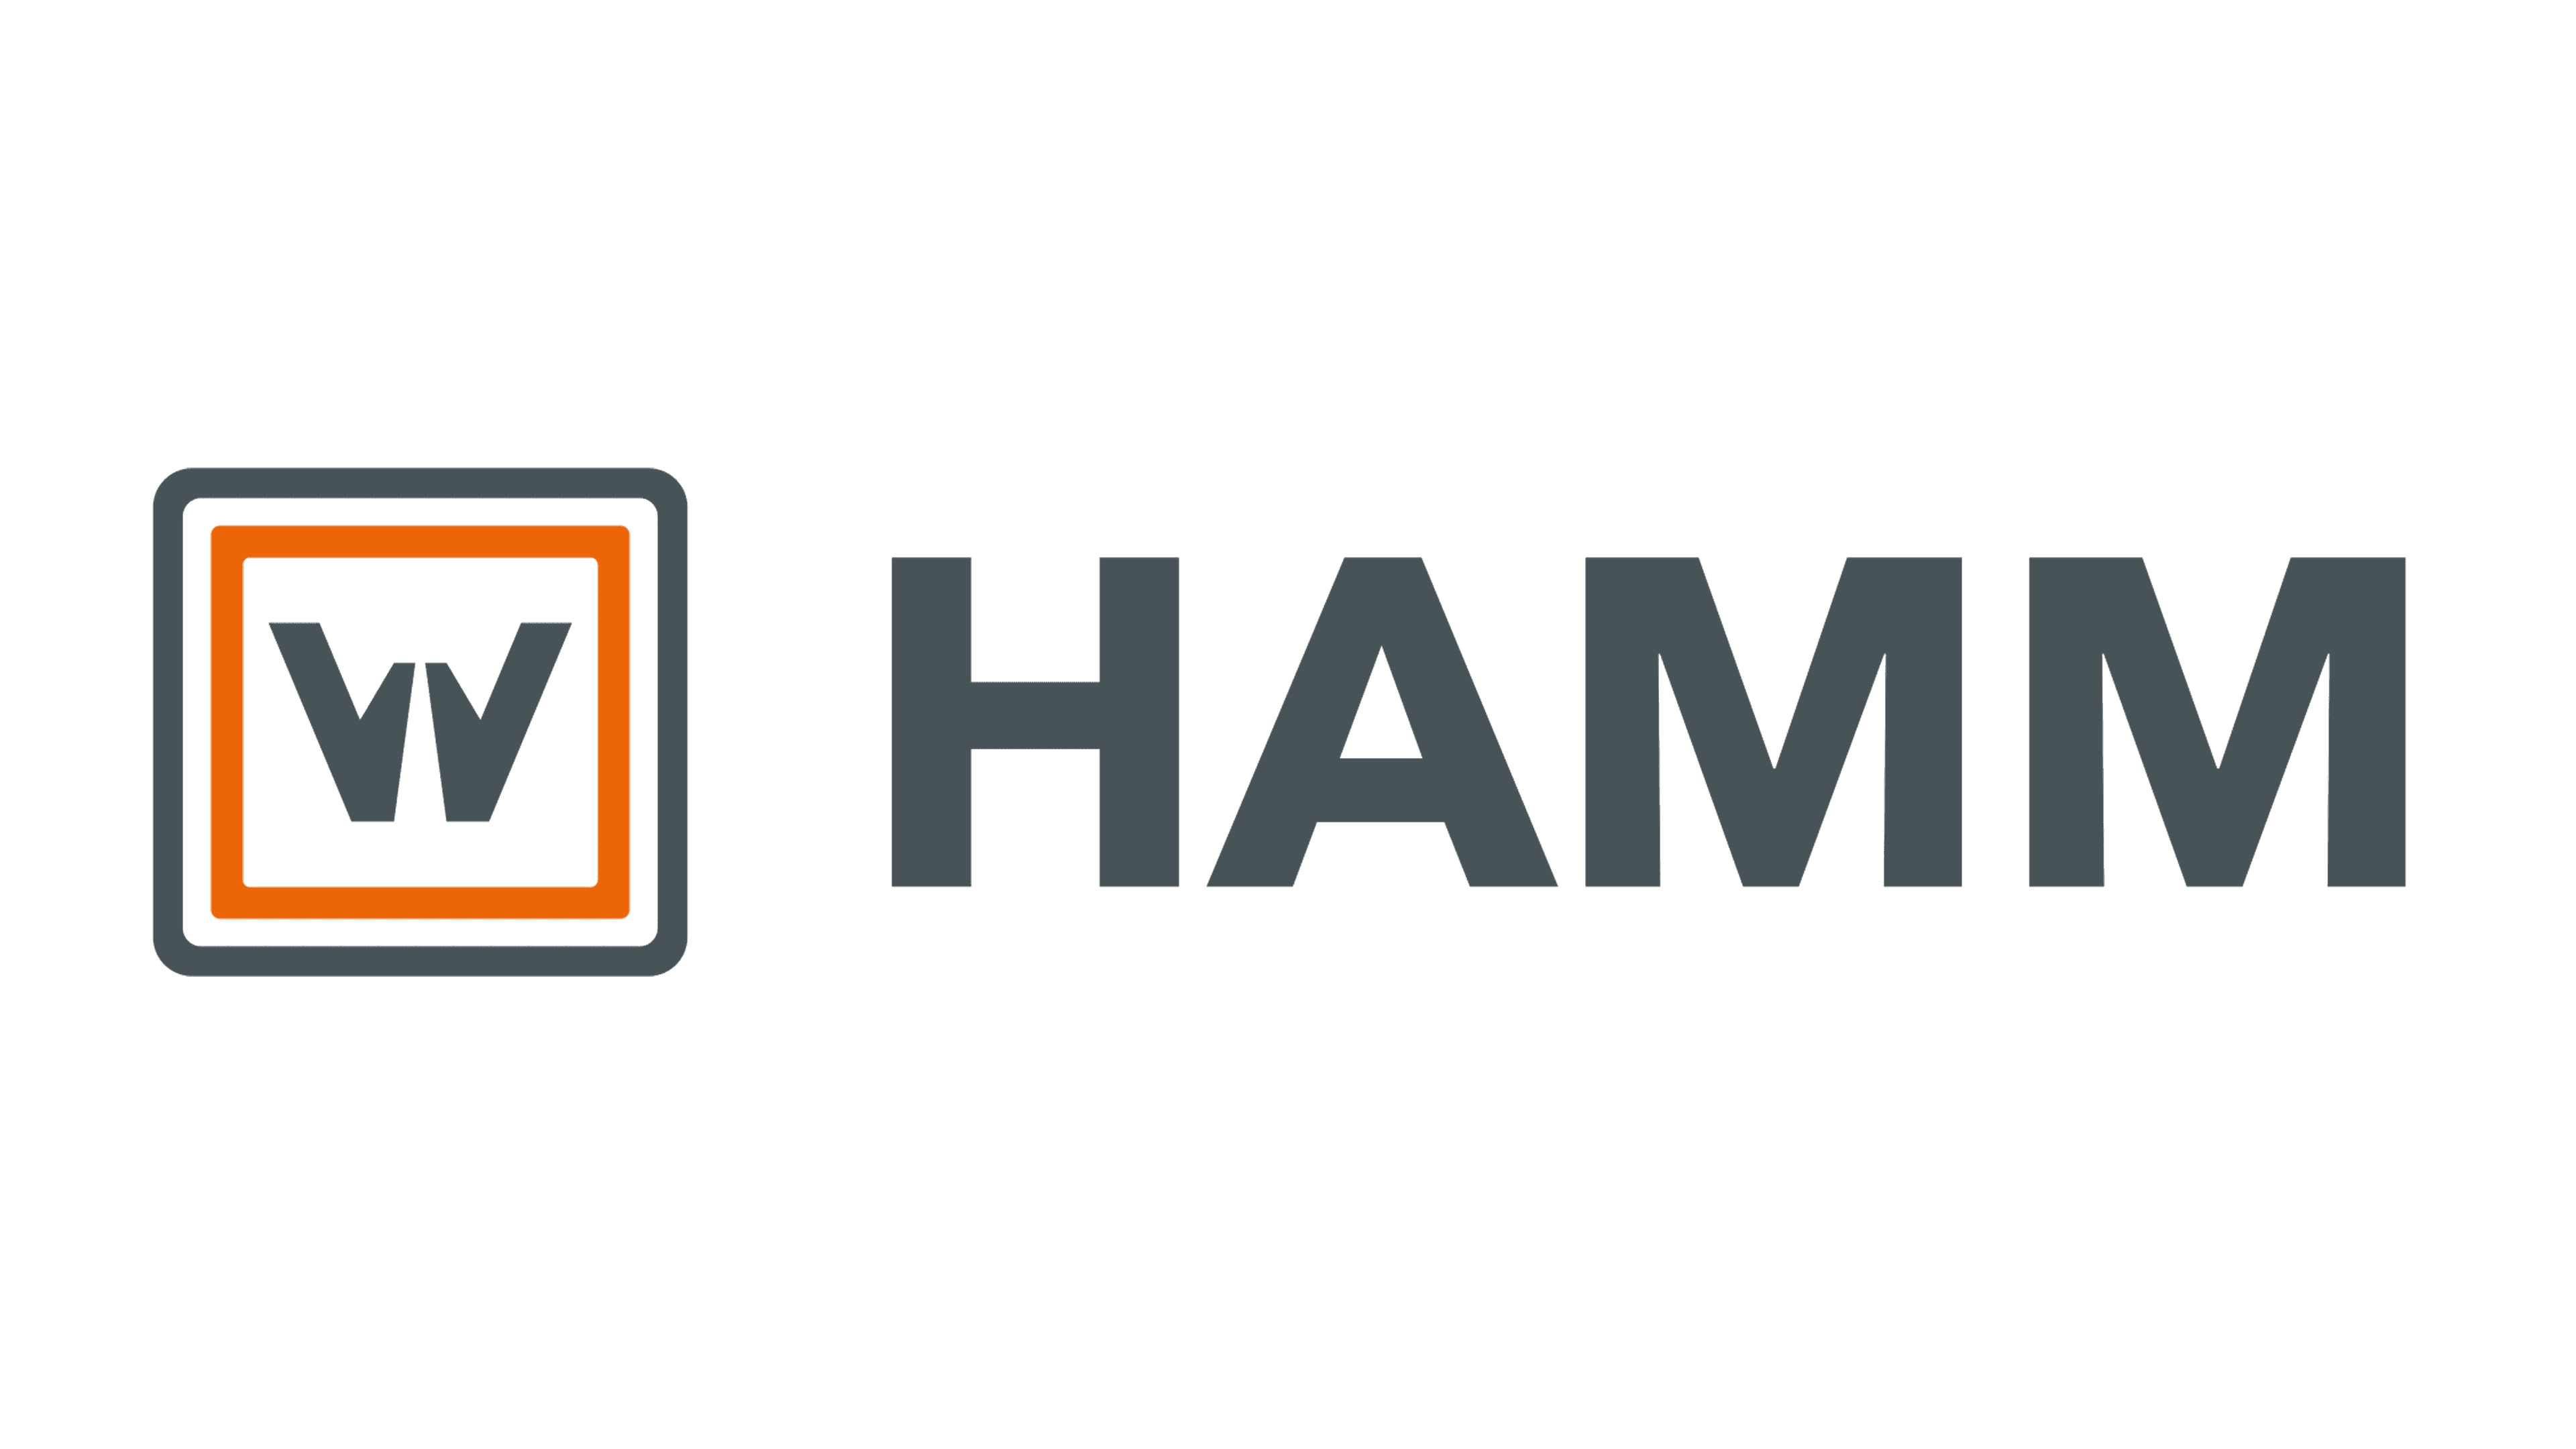 Logo Hamm